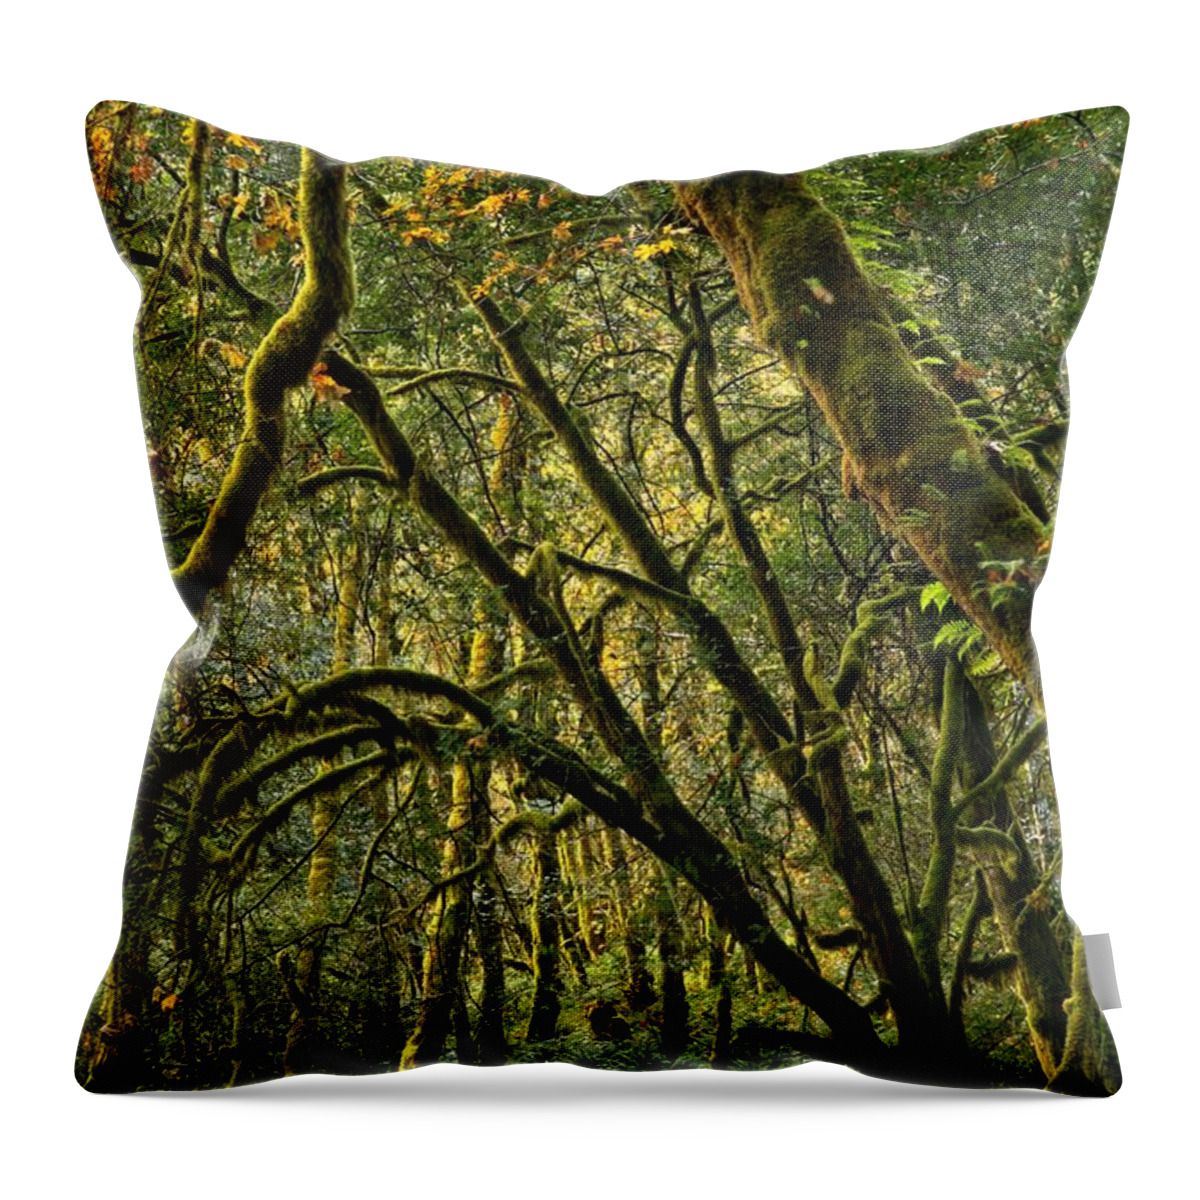 Oregon Rainforest Throw Pillow featuring the photograph Oregon Rainforest Green by Adam Jewell